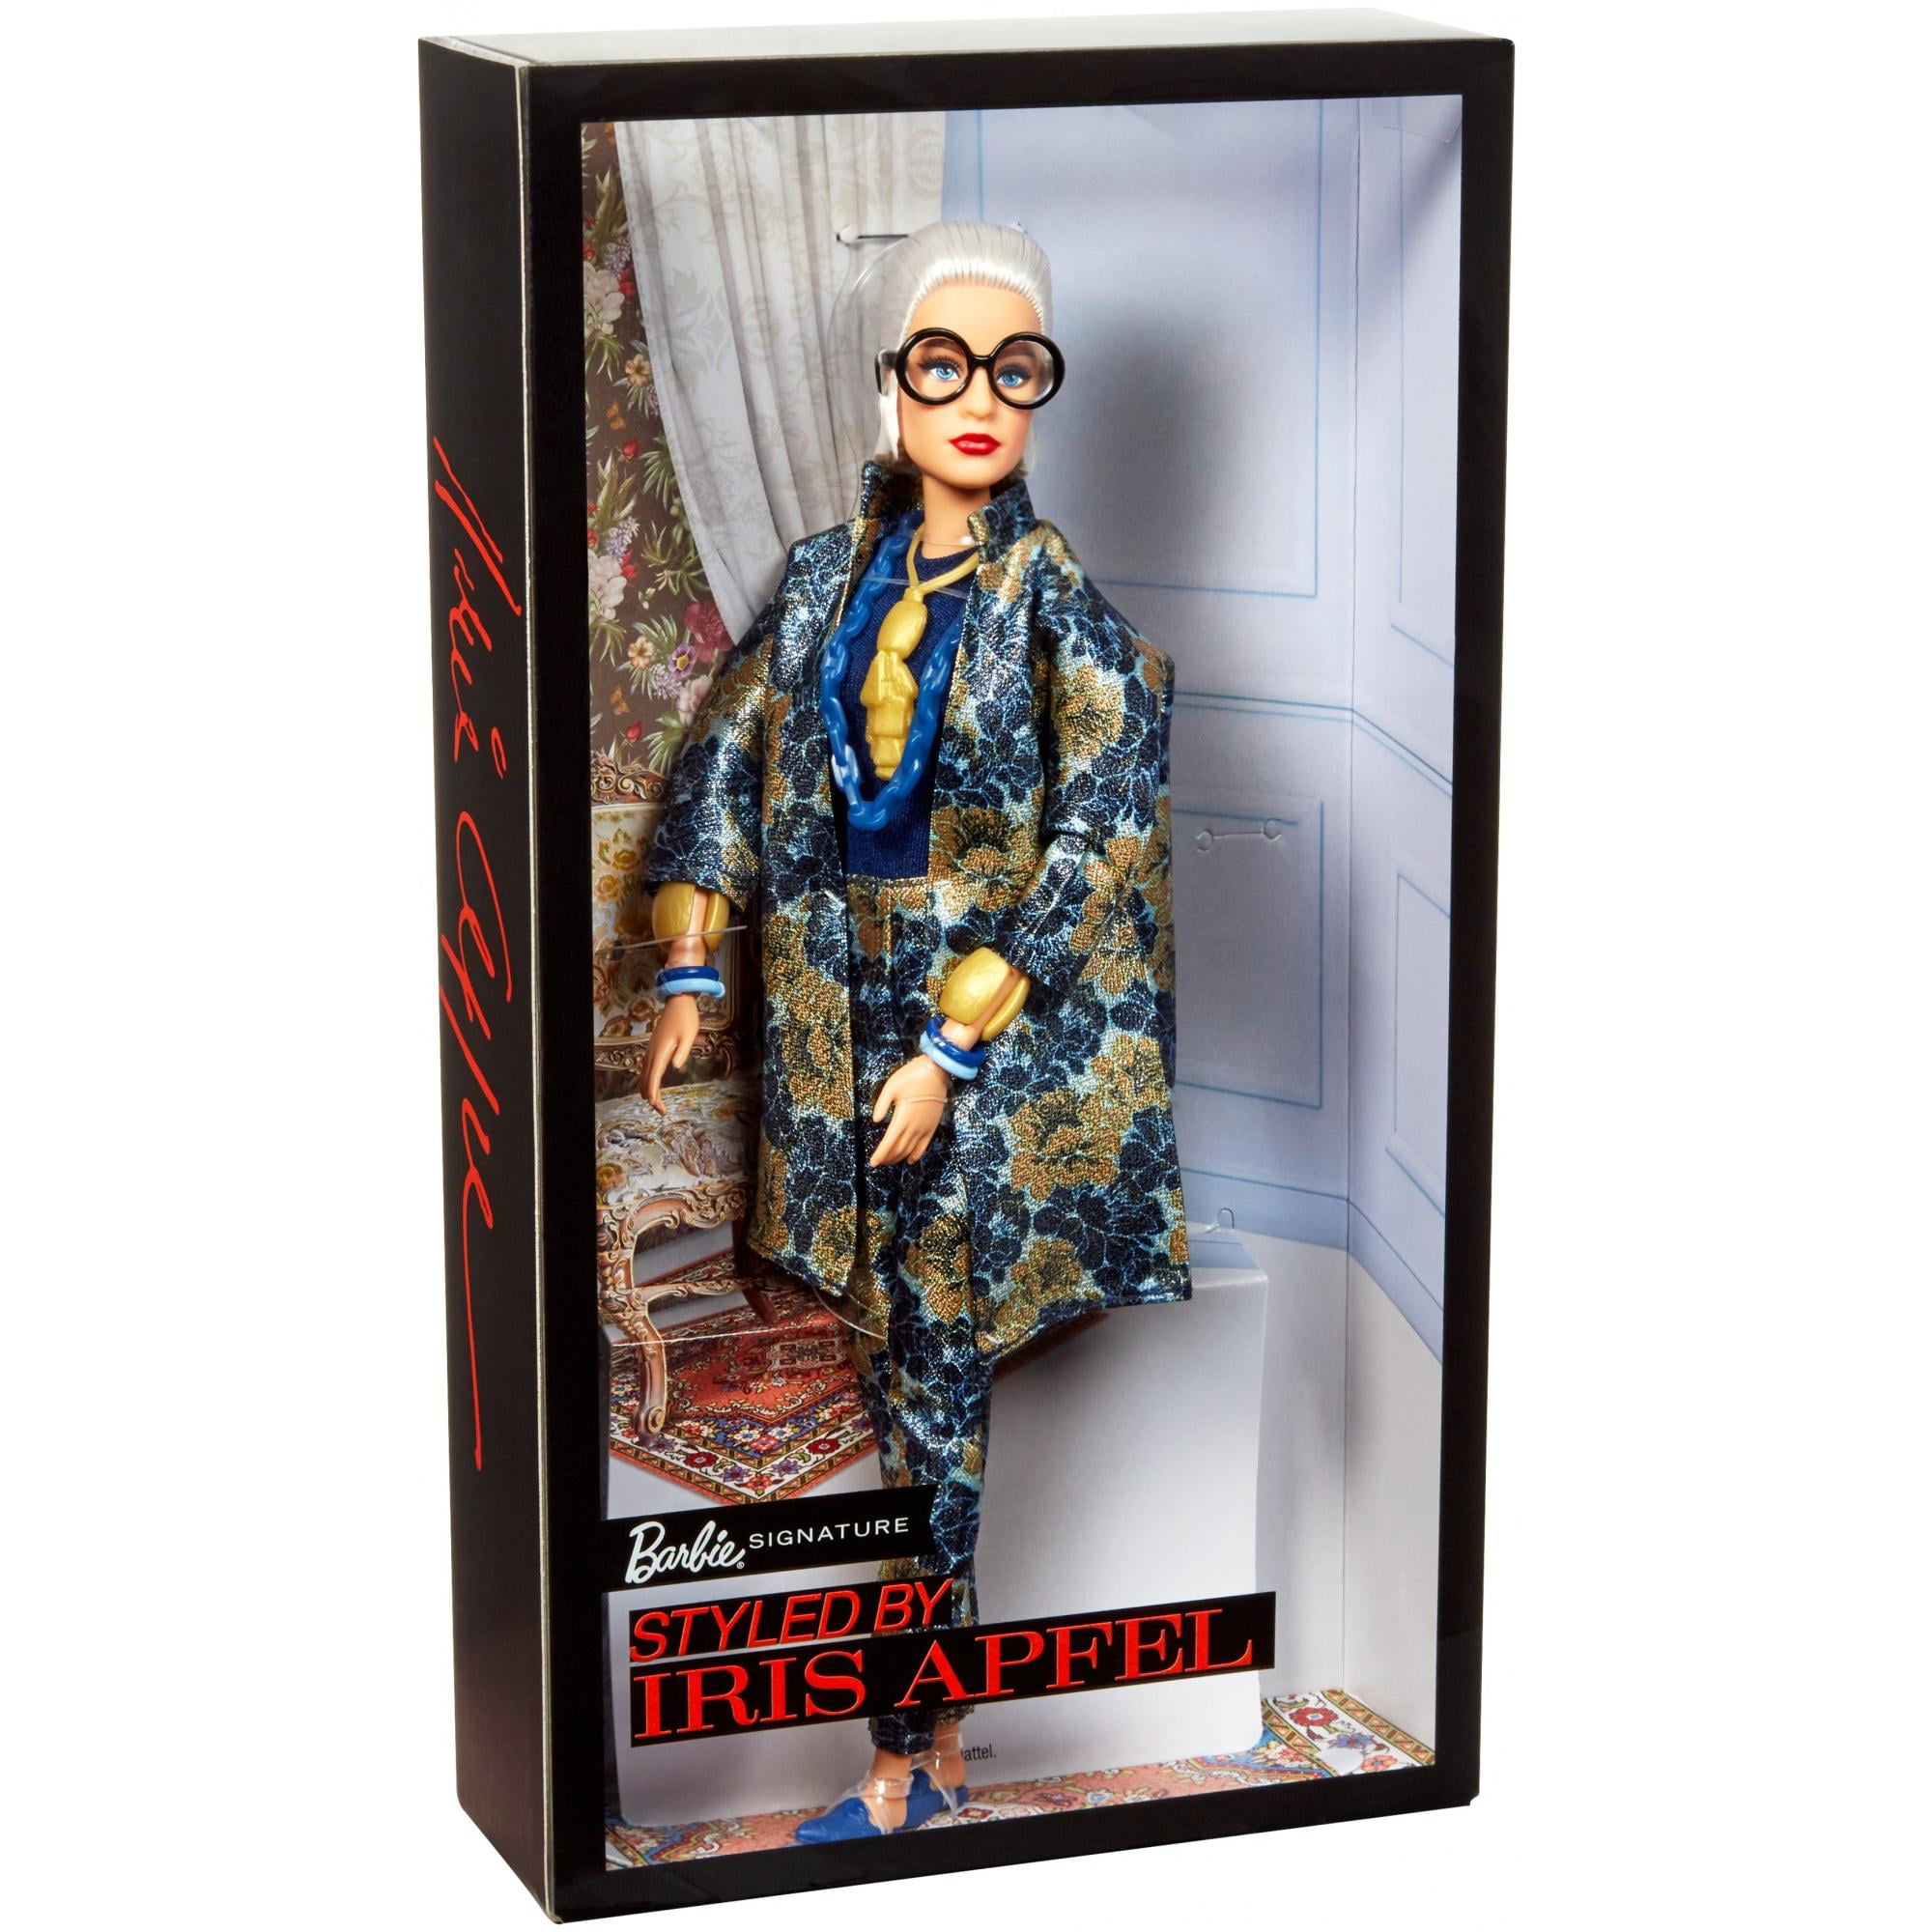 iris apfel barbie doll where to buy